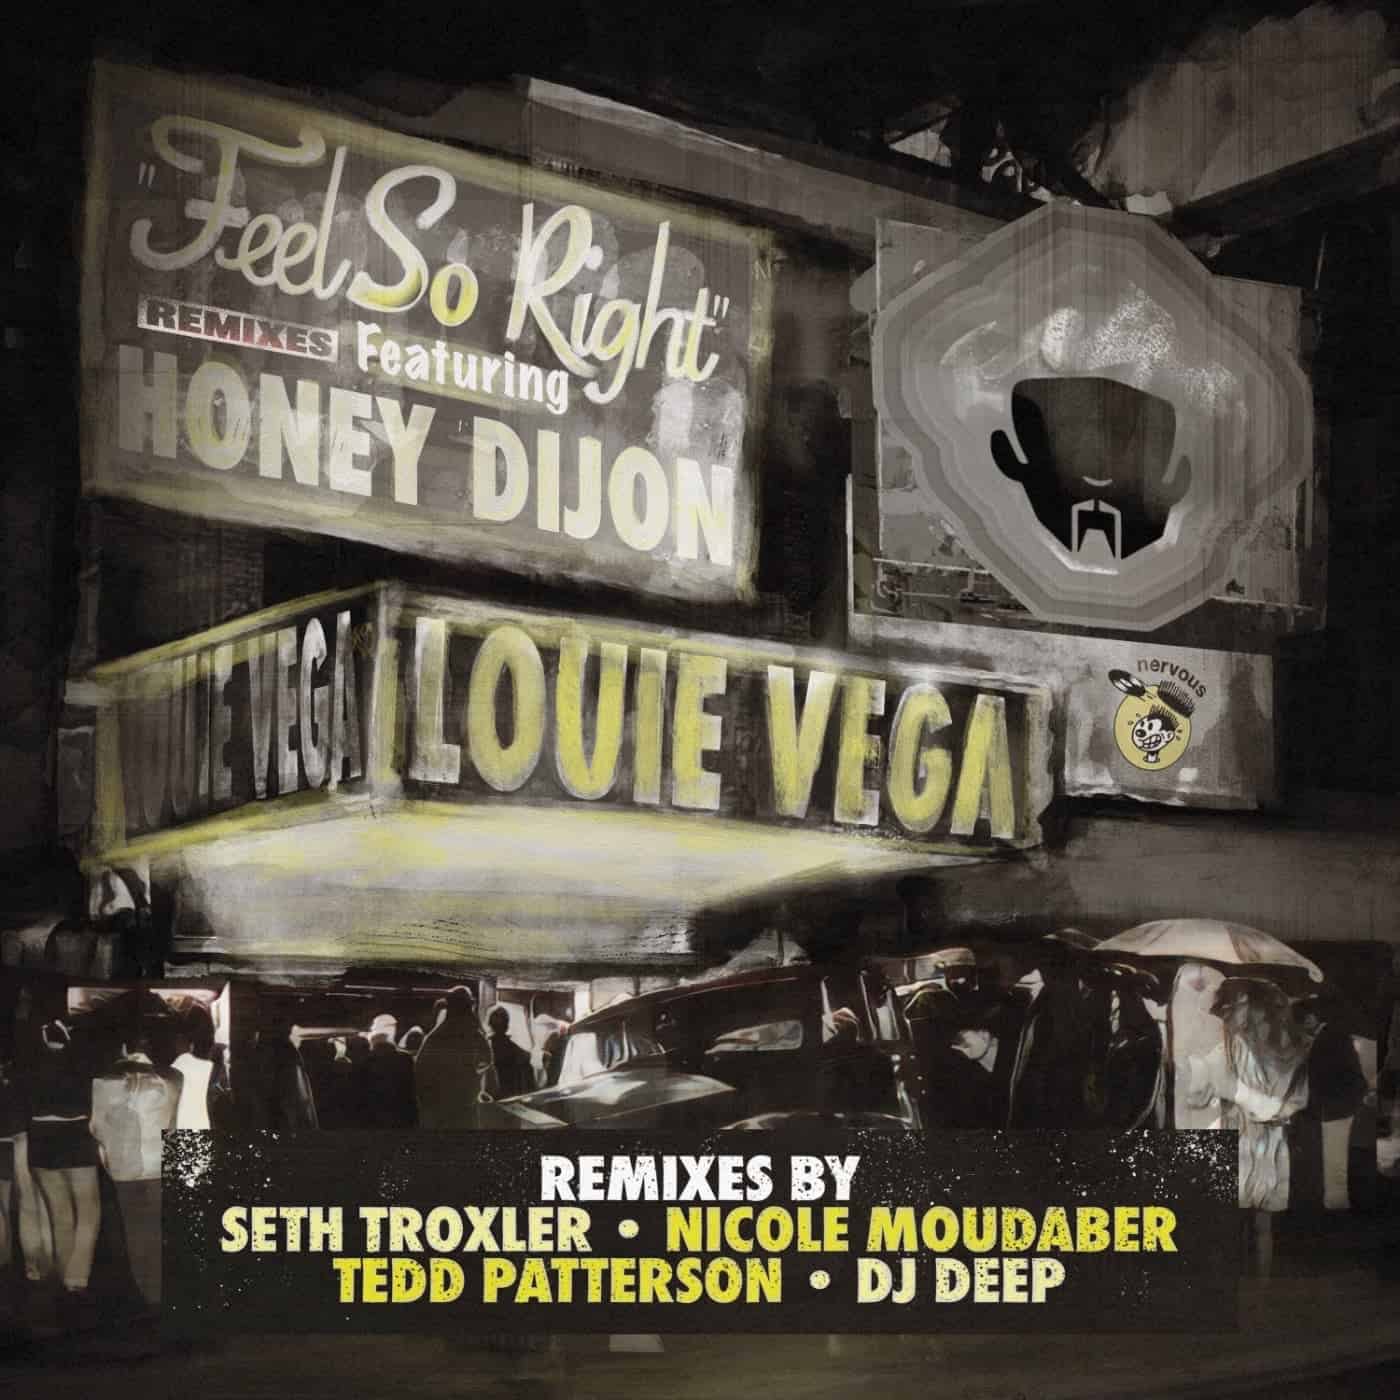 image cover: Honey Dijon, Louie Vega - Here We Go Feel So Right feat. Honey Dijon (Remixes) / Nervous Records